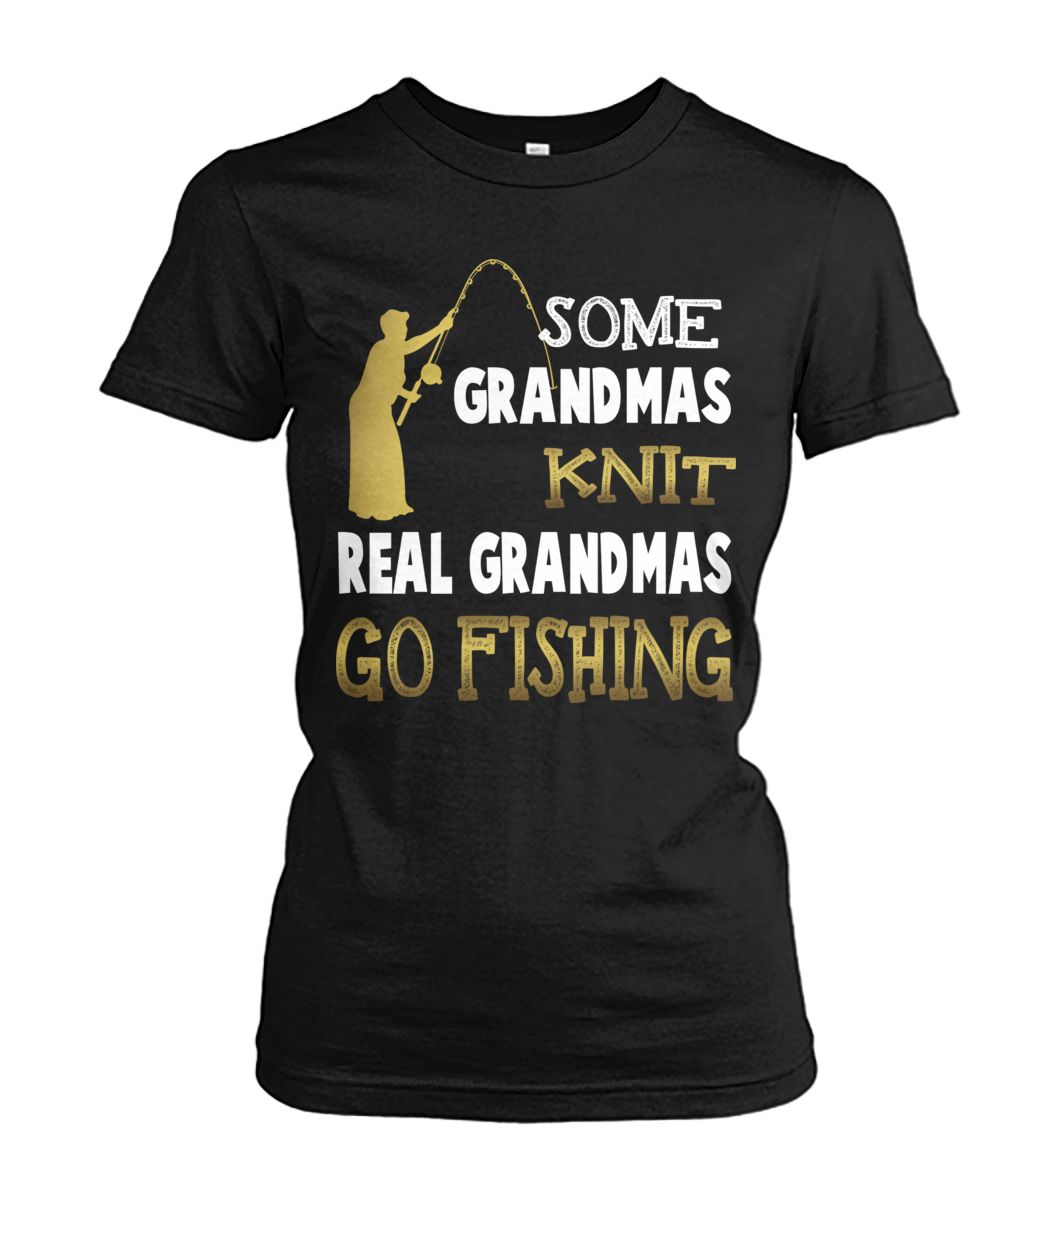 Some grandmas knit real grandmas go fishing women's crew tee